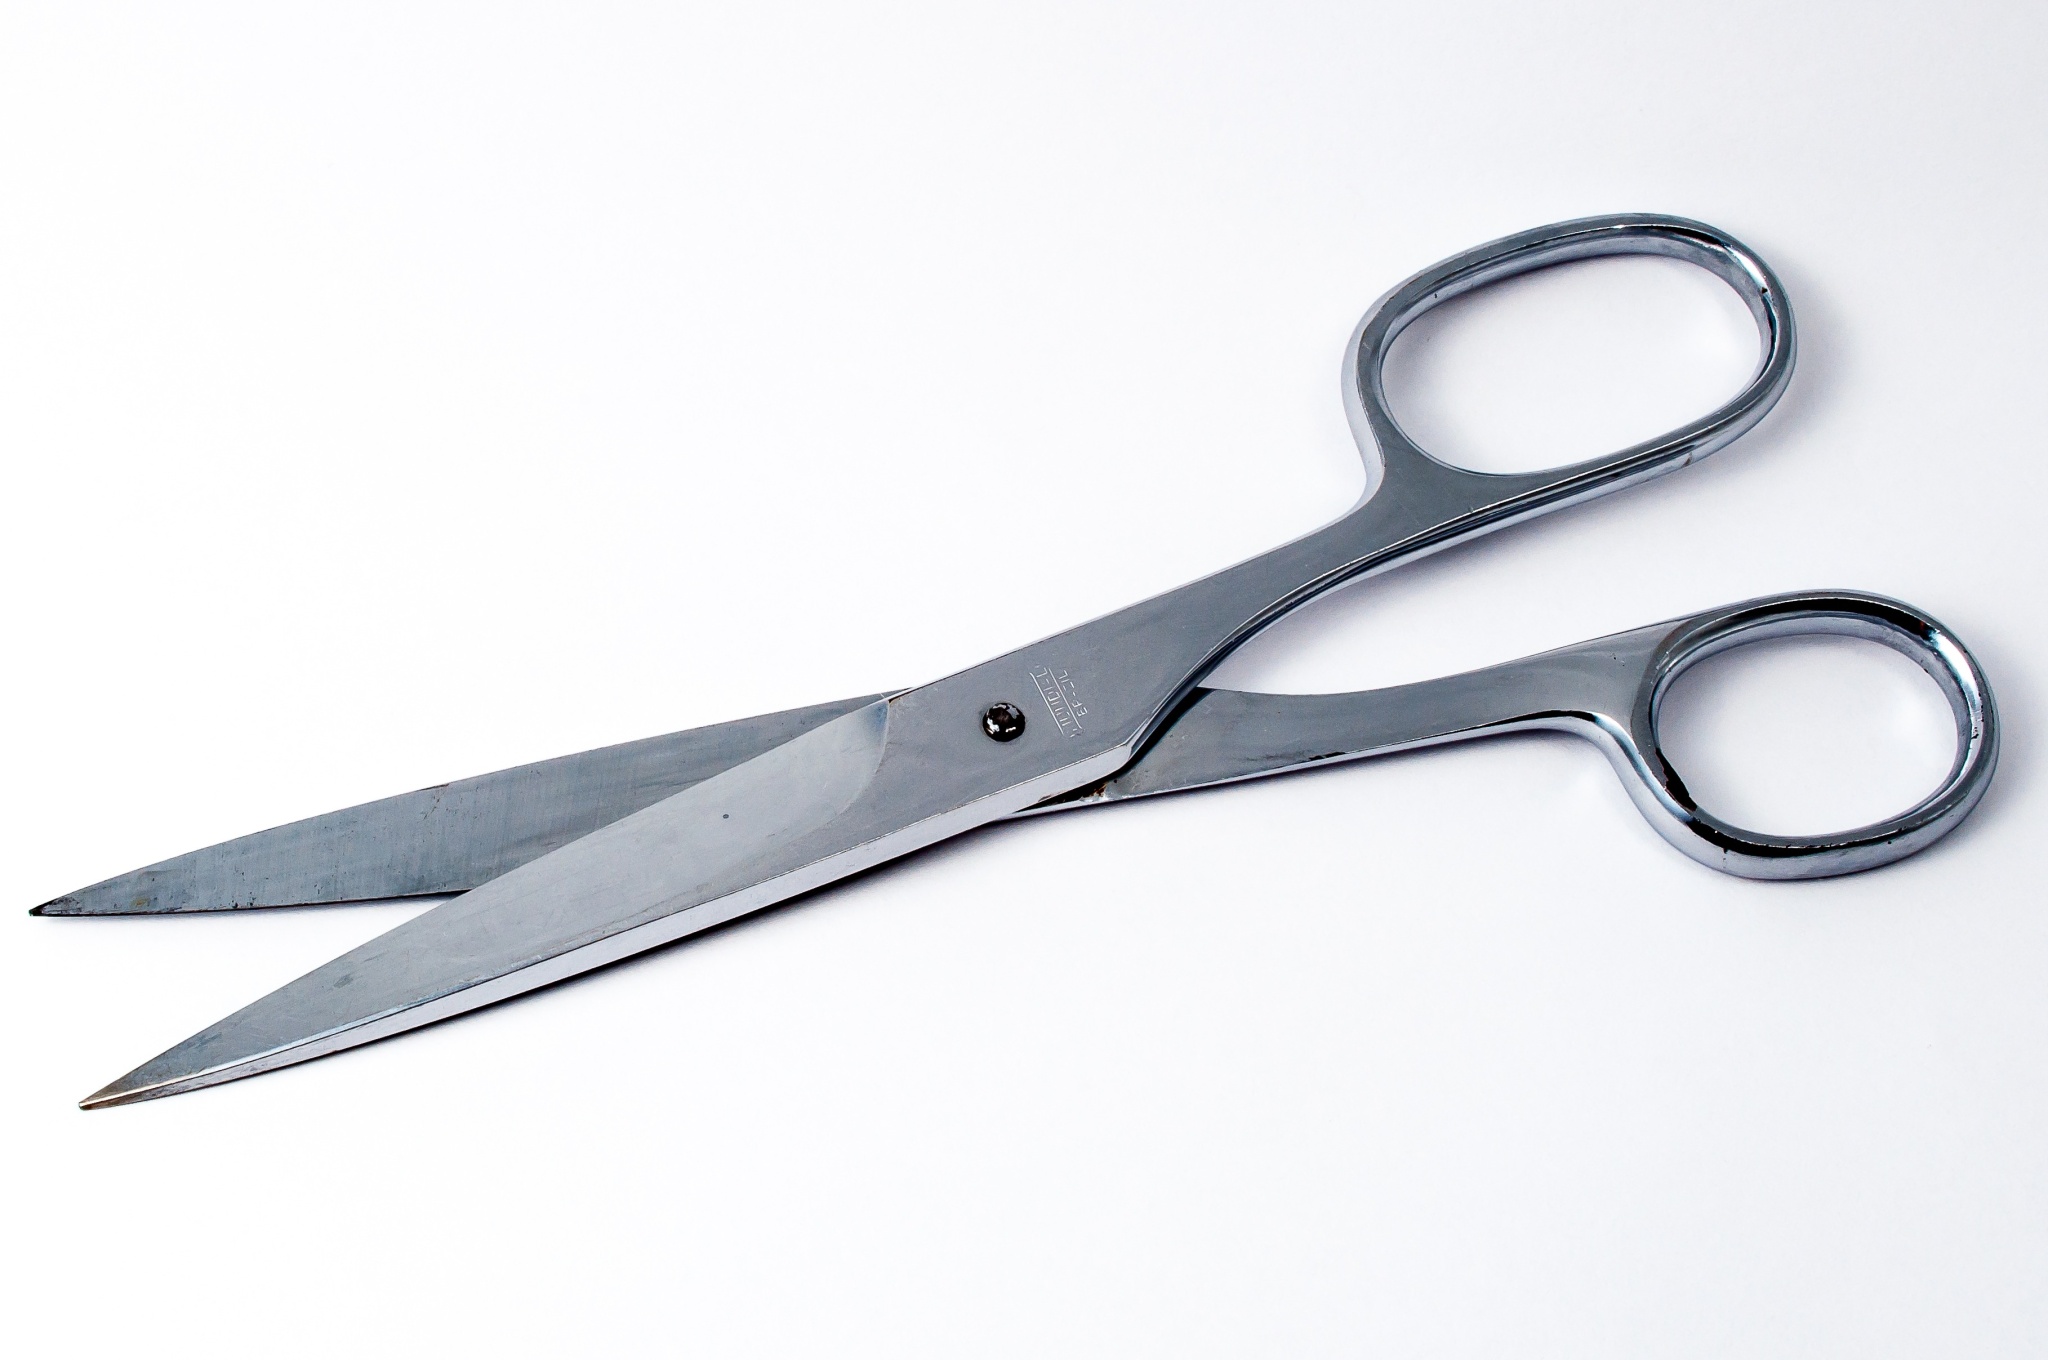 tool-metal-office-cut-propeller-scissors-1105274-pxhere.com.jpg